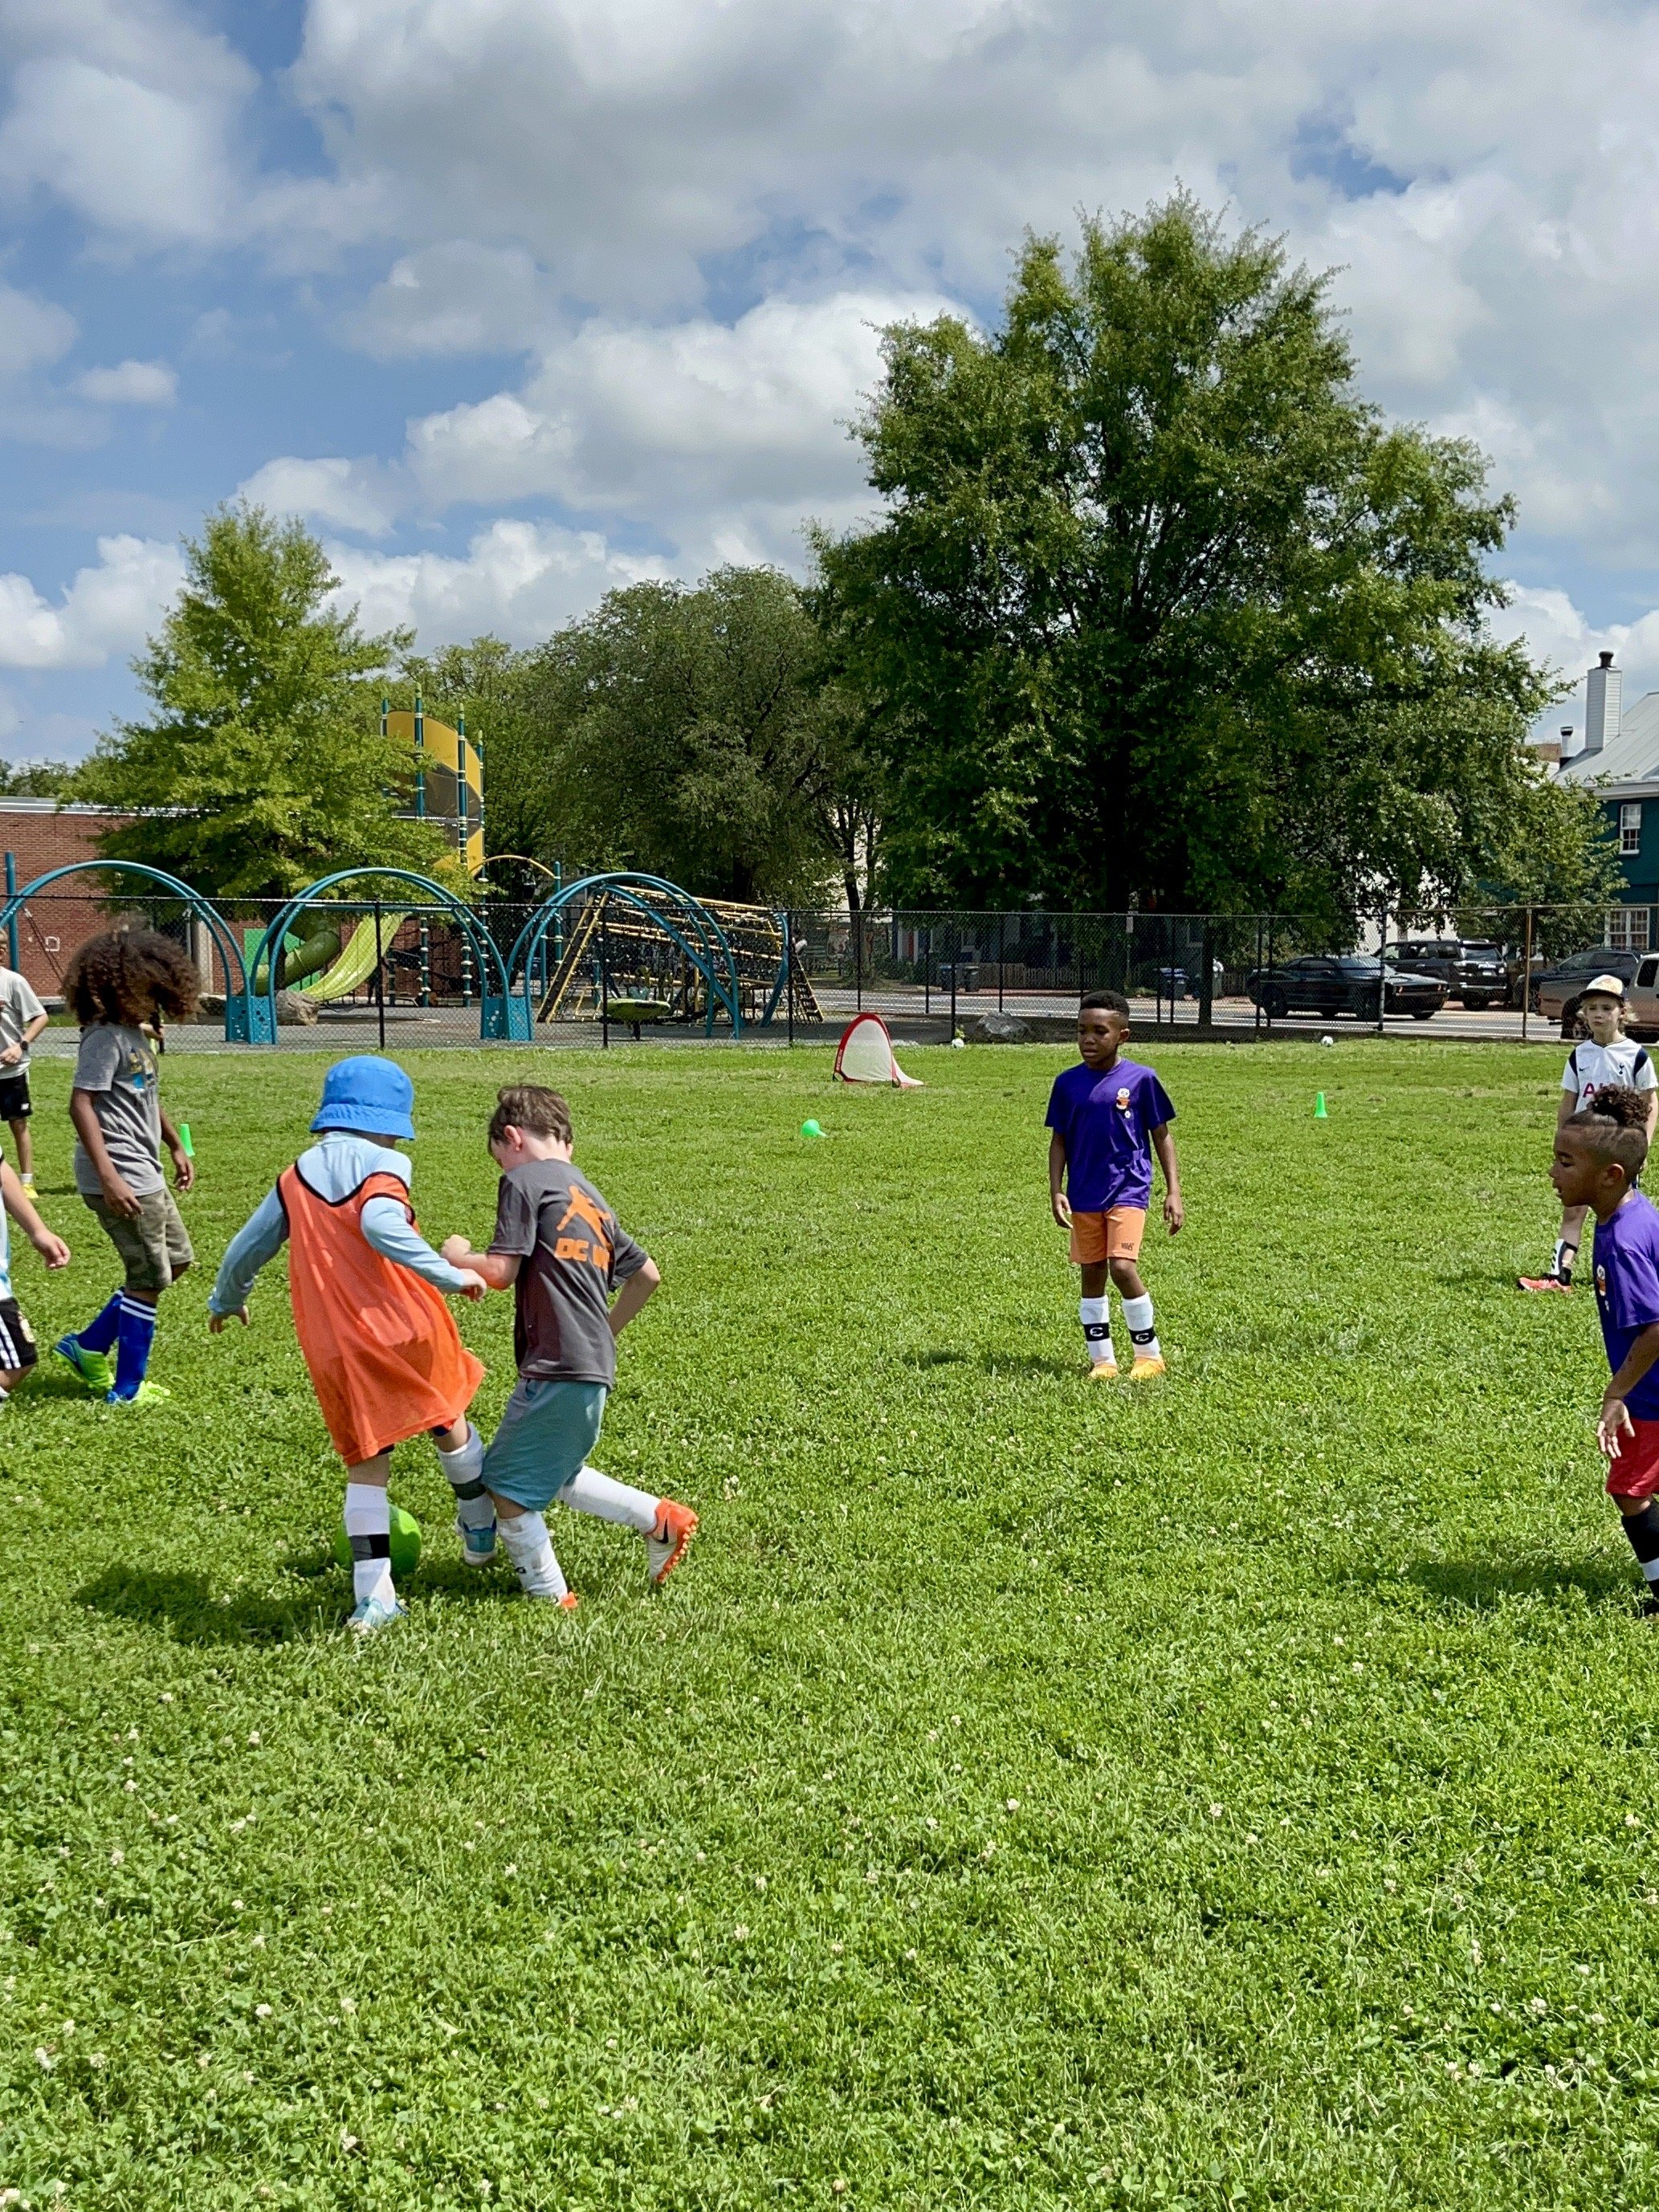 Dc-way-soccer-club-for-kids-in-washington-dc-summer-camp-at-tyler-elementary-school- 8636.JPG